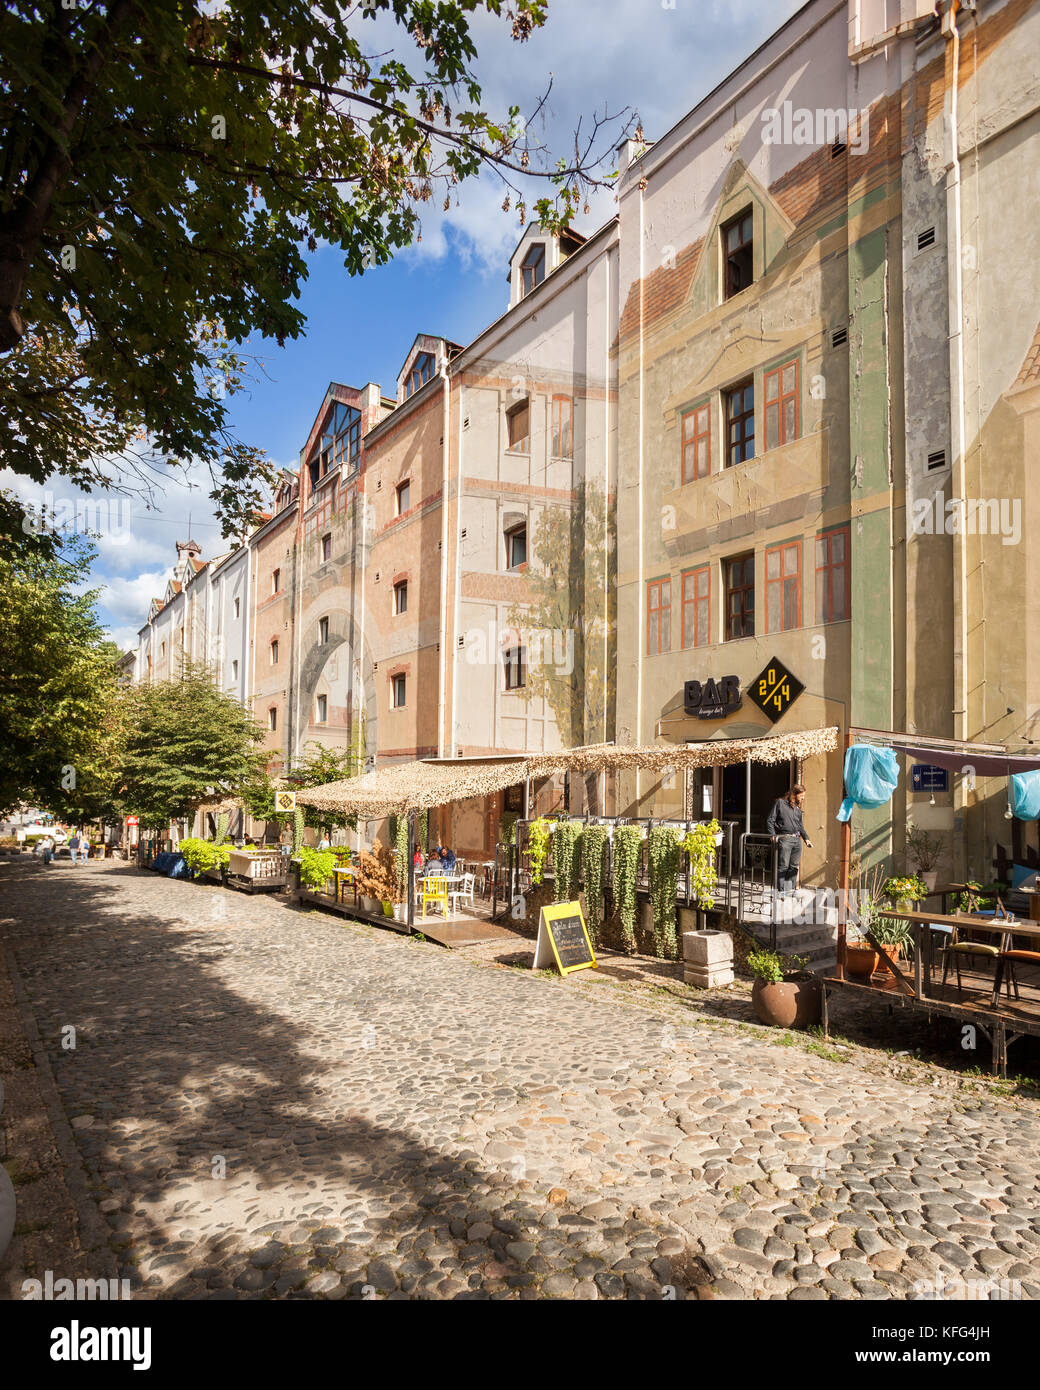 BELGRADE, Serbia - 4 Sept: Tourists enjoy the cafes of Skandarlija (Skandarska), Belgrade's bohemian quarter, on 4 Sept 2017. Stock Photo